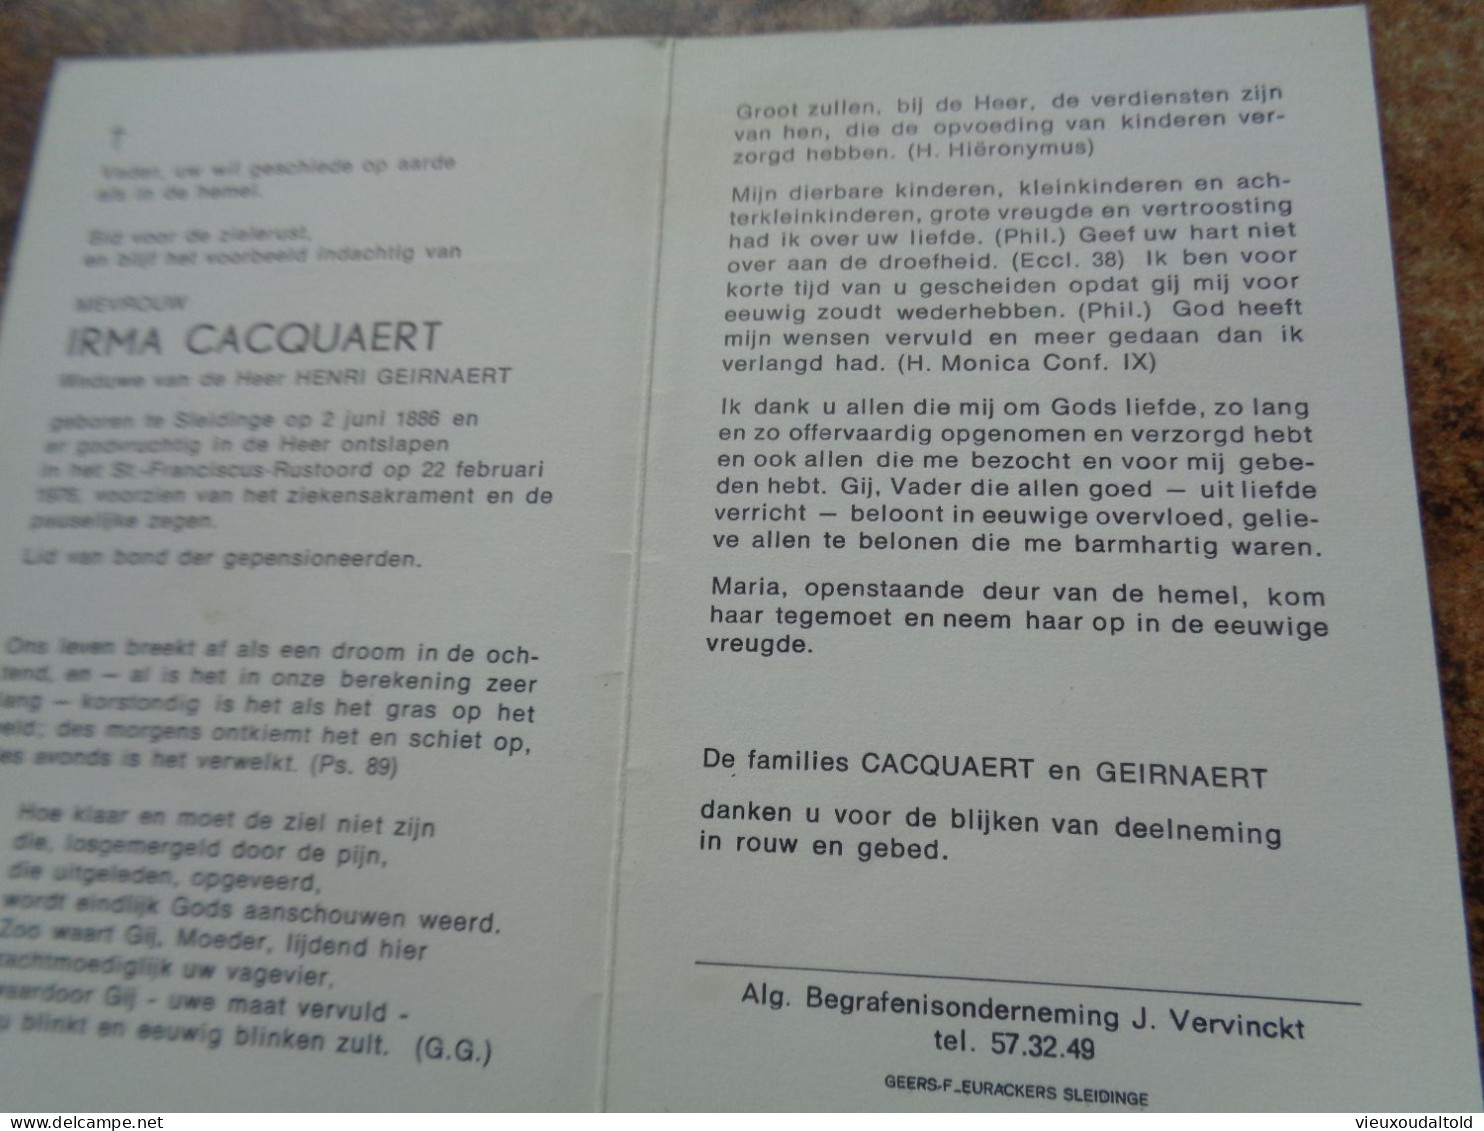 Doodsprentje/Bidprentje  IRMA CACQUAERT   Sleidinge 1886-1976  (Wwe Henri GEIRNAERT) - Godsdienst & Esoterisme